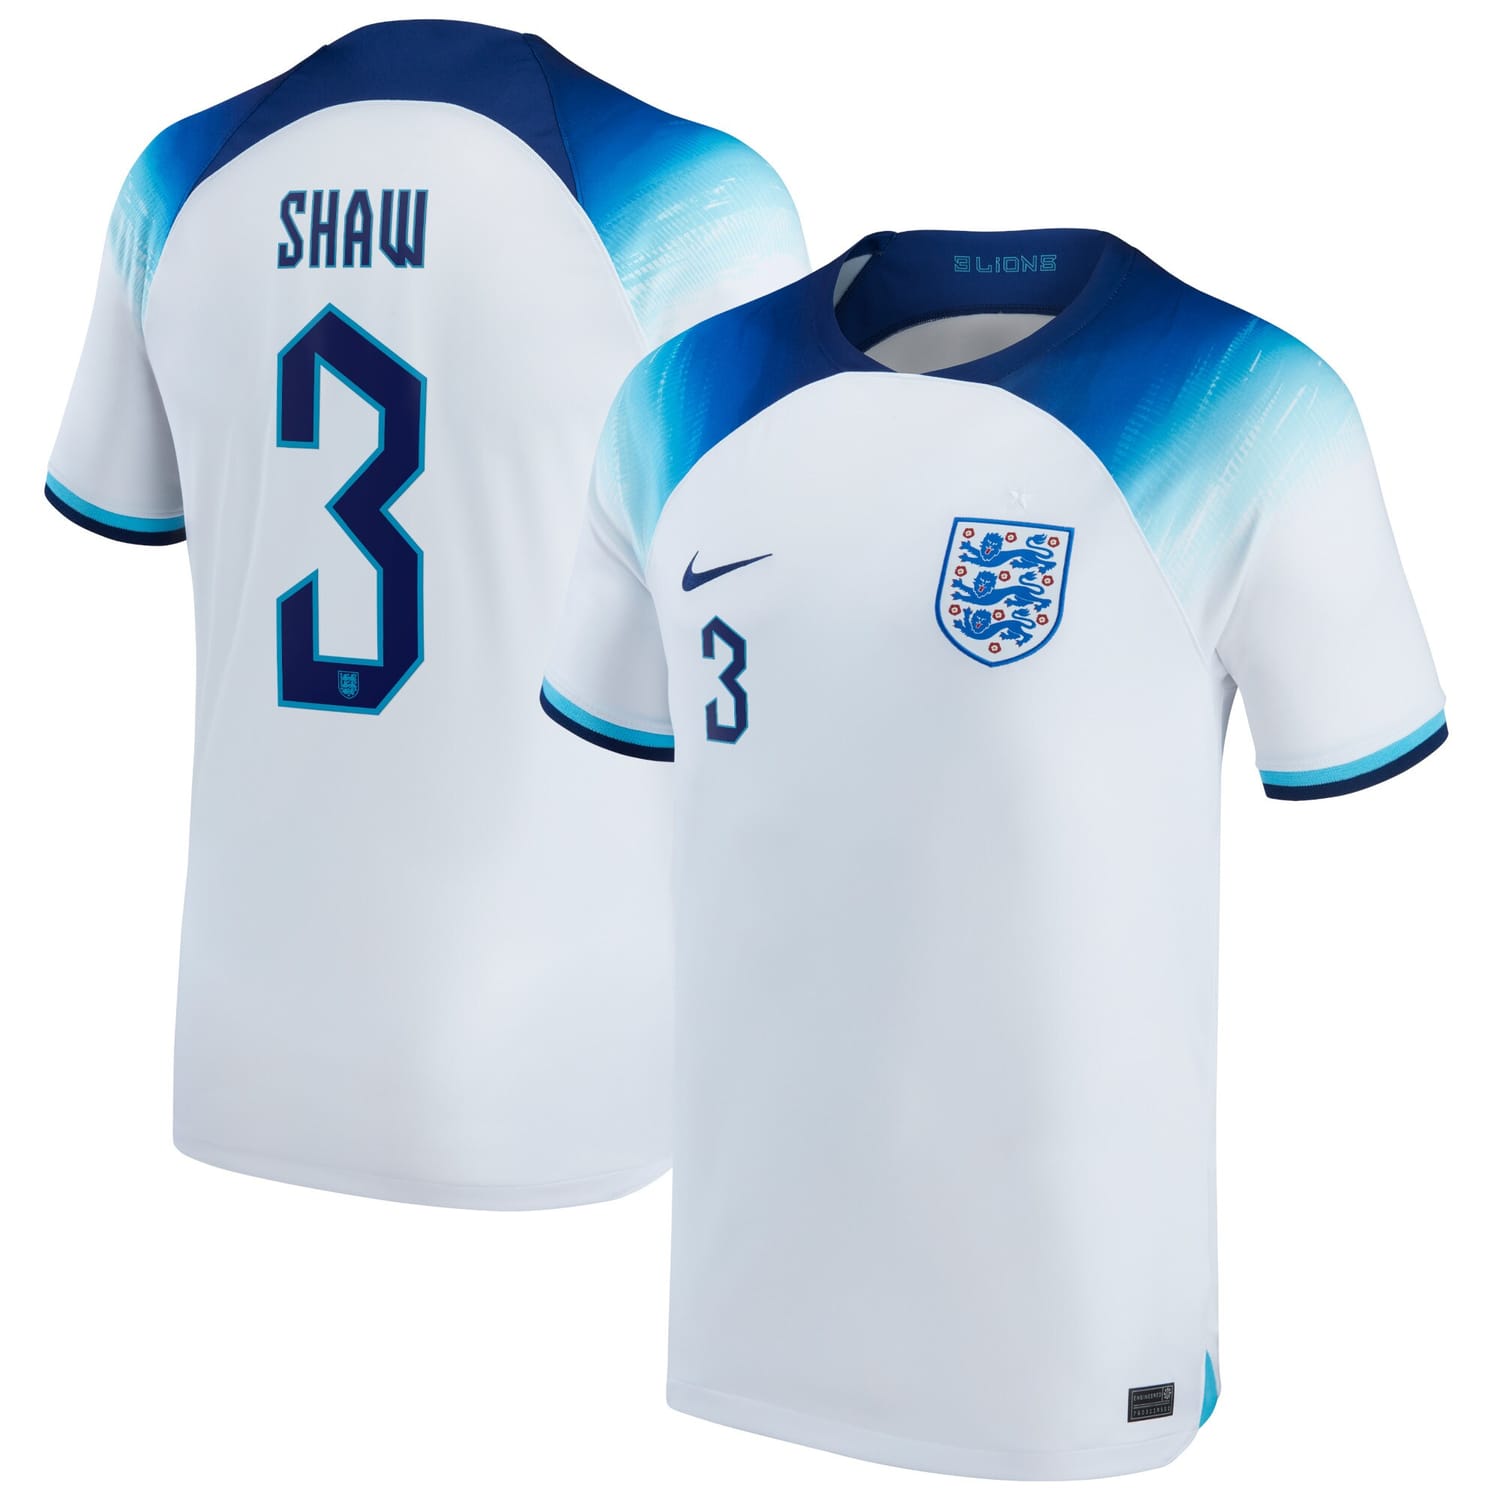 England National Team Home Jersey Shirt 2022 player Luke Shaw 3 printing for Men